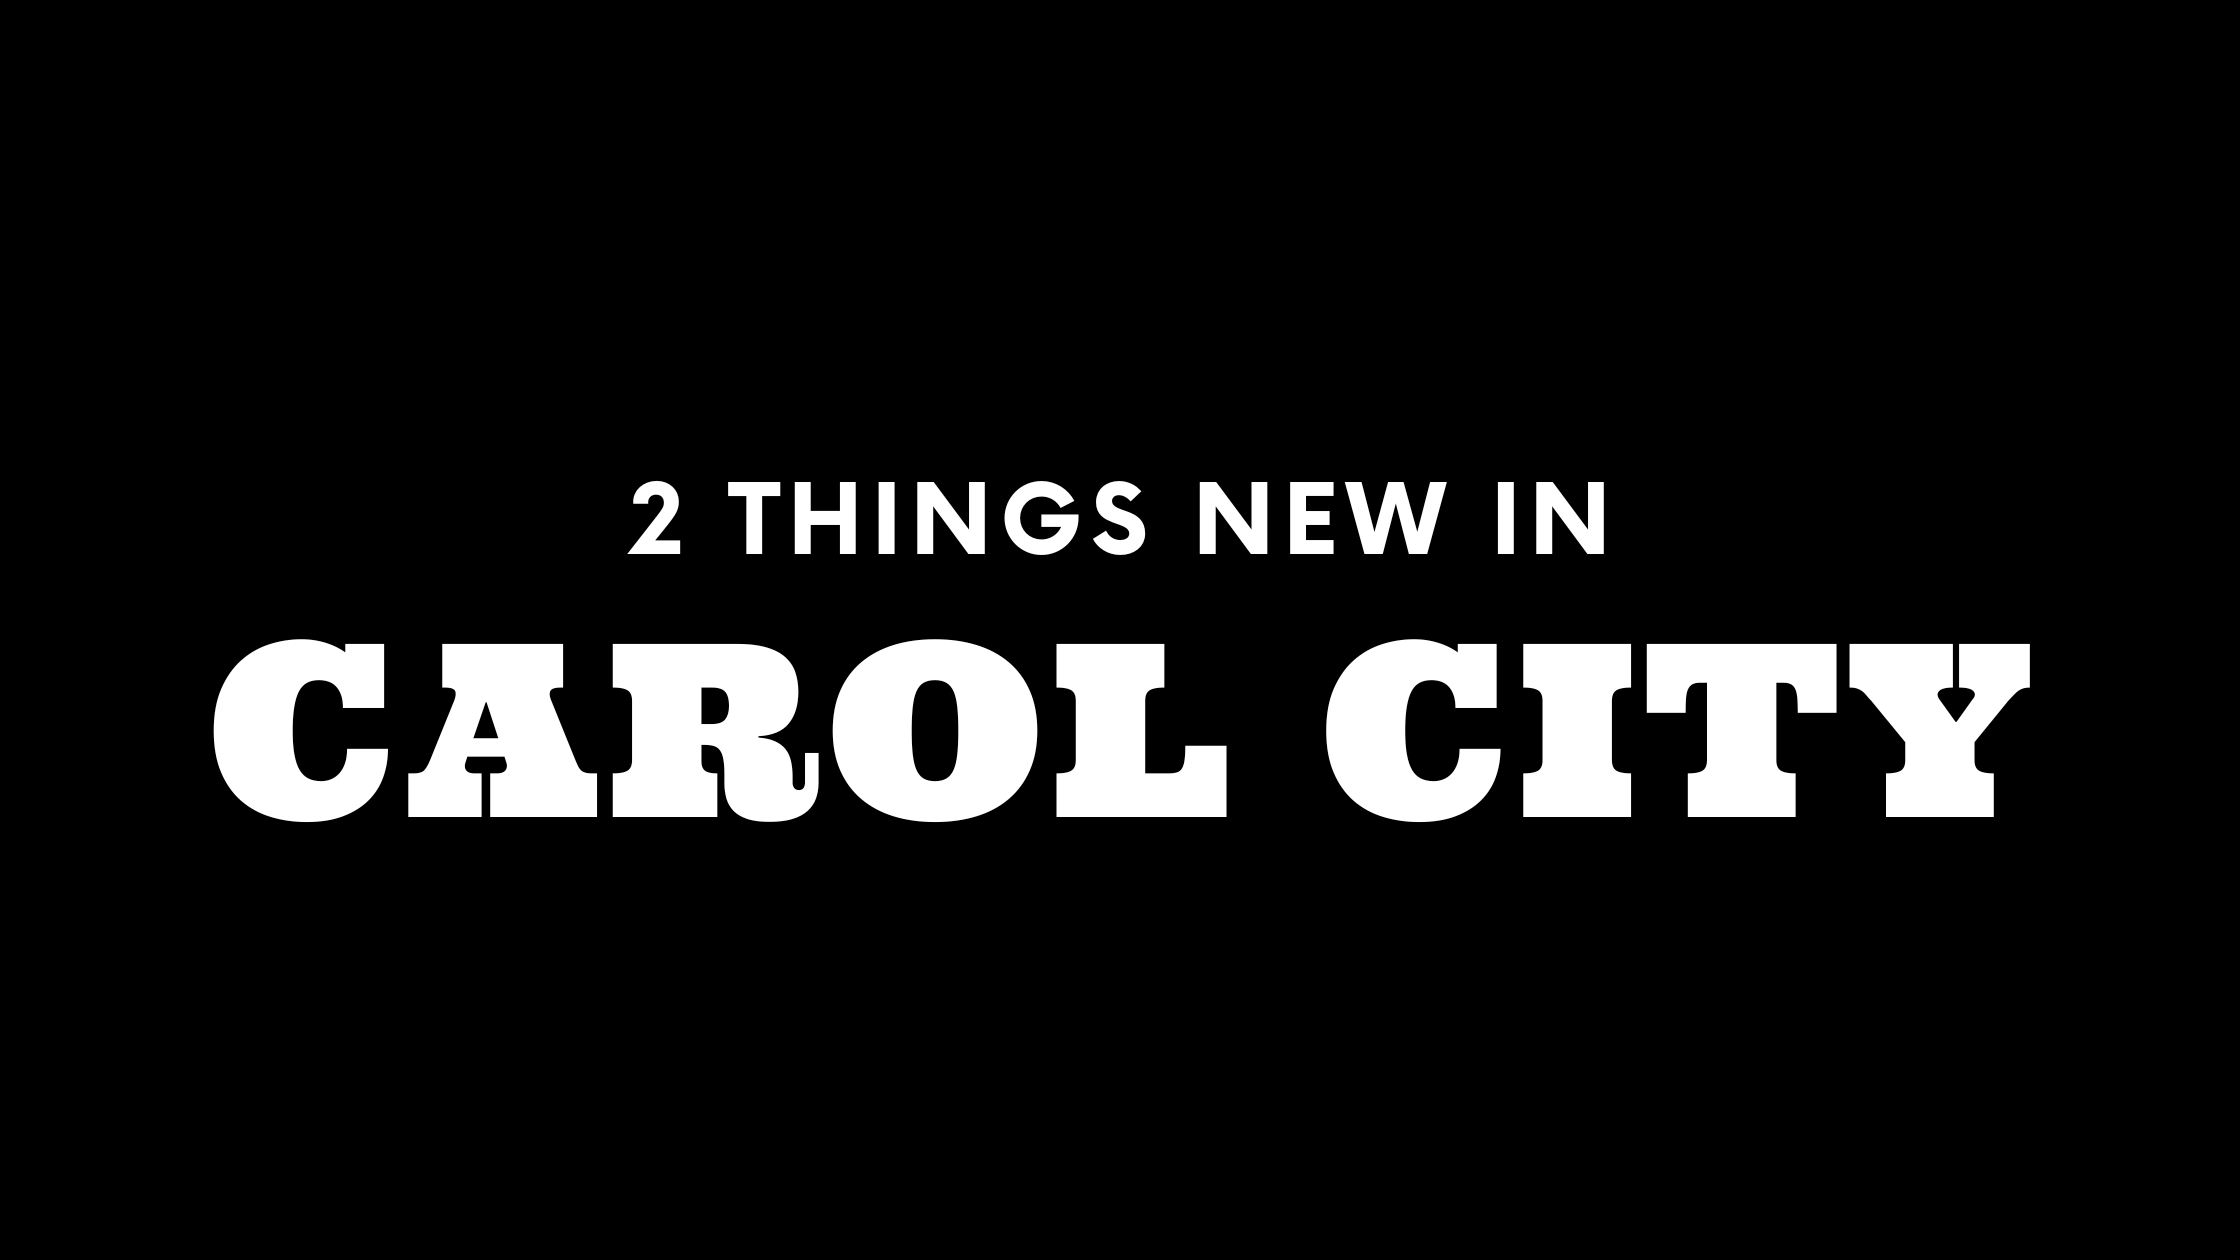 2 Things New in Carol City!